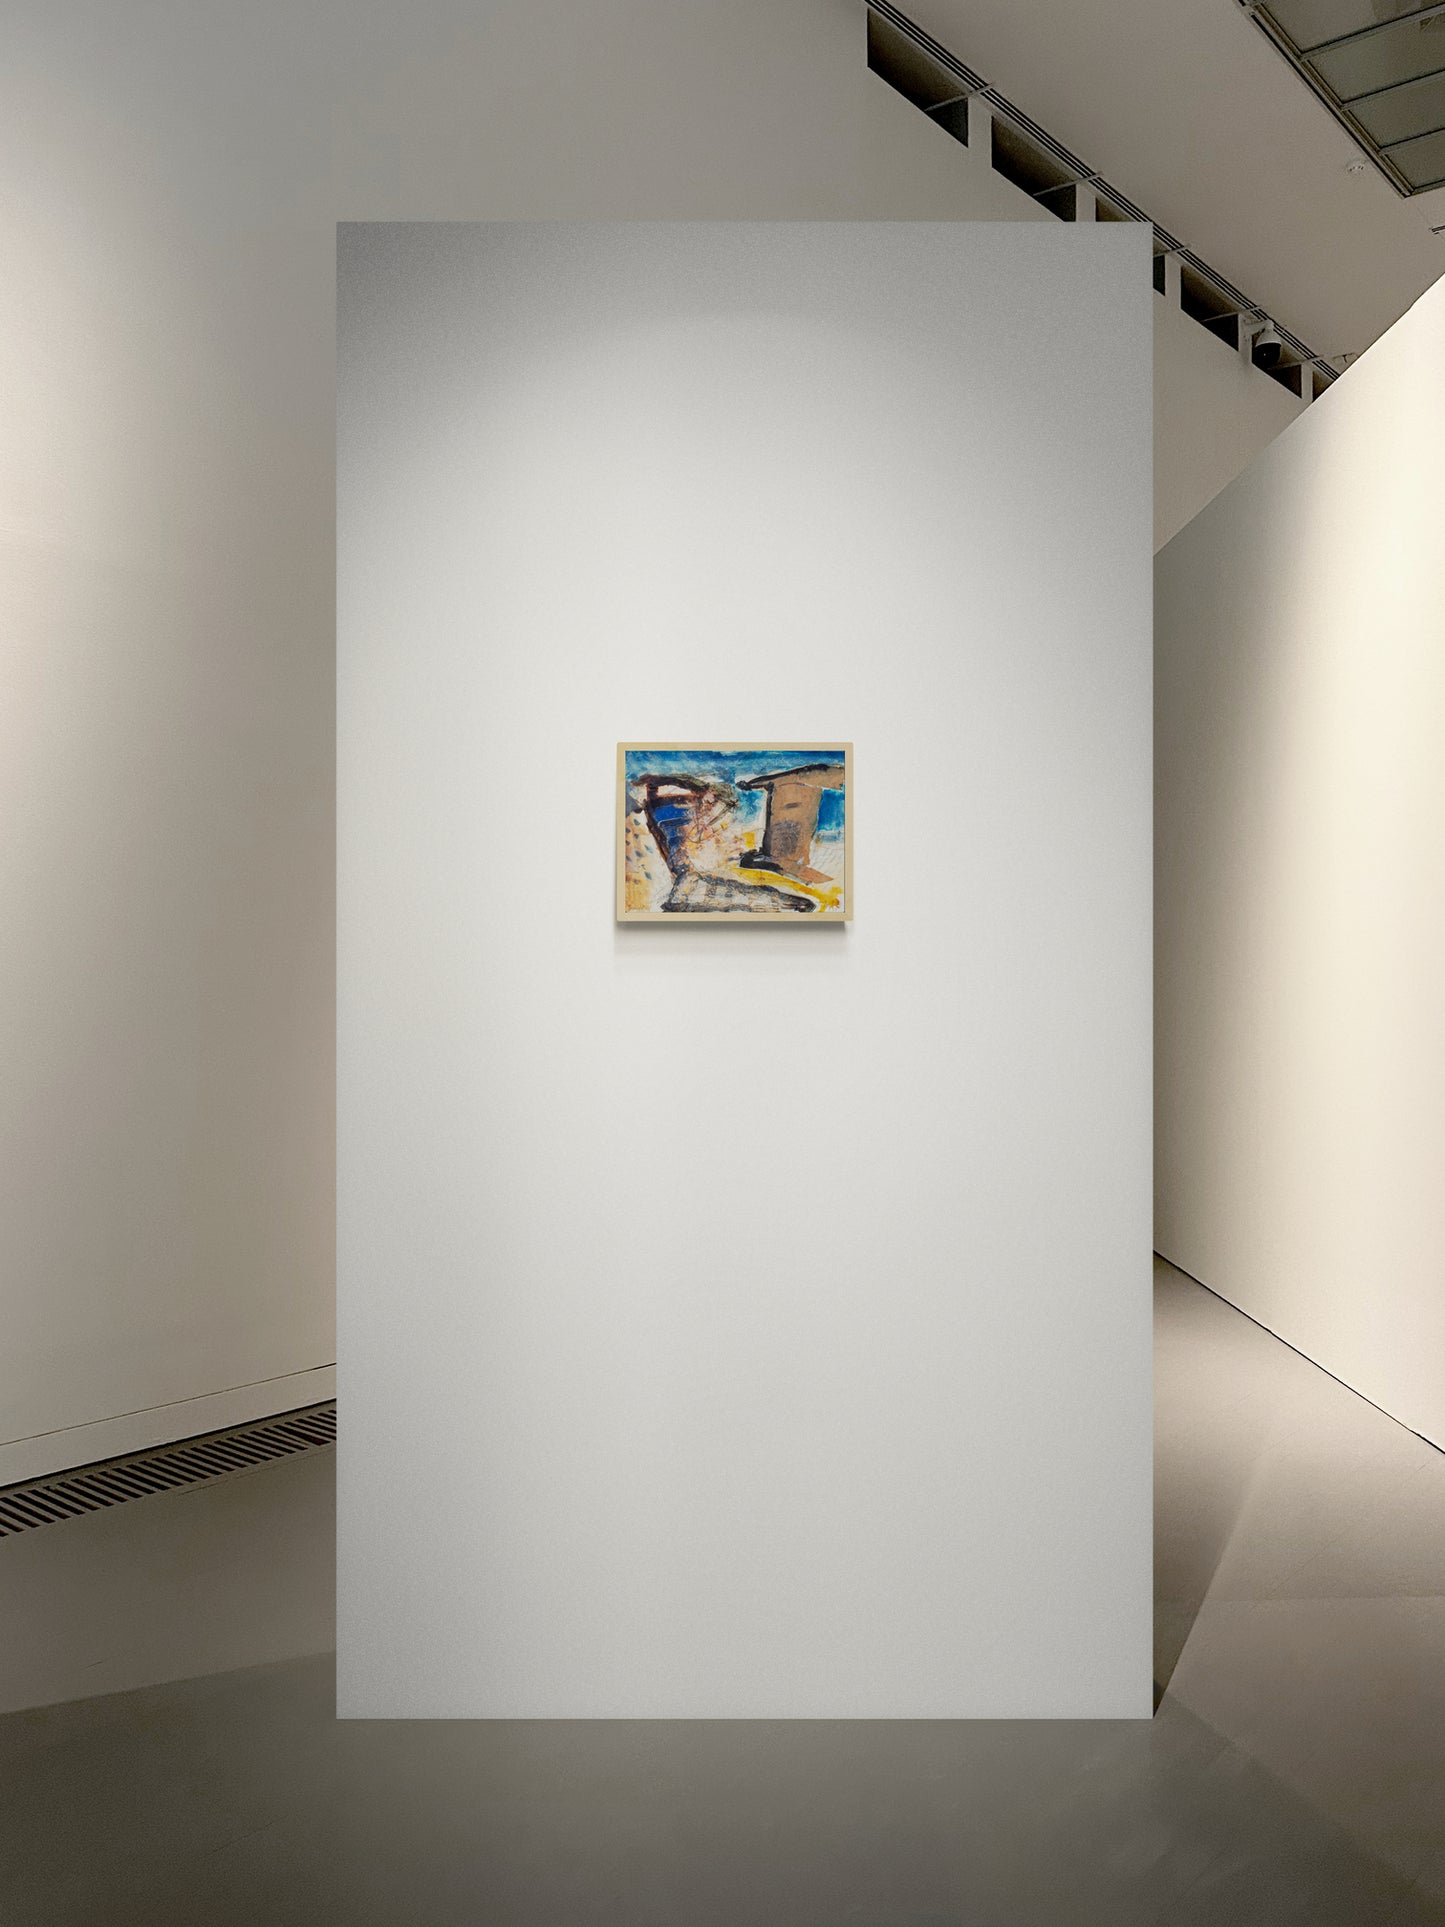 Thomas Perl - Costa del sol (38 x 28 cm)